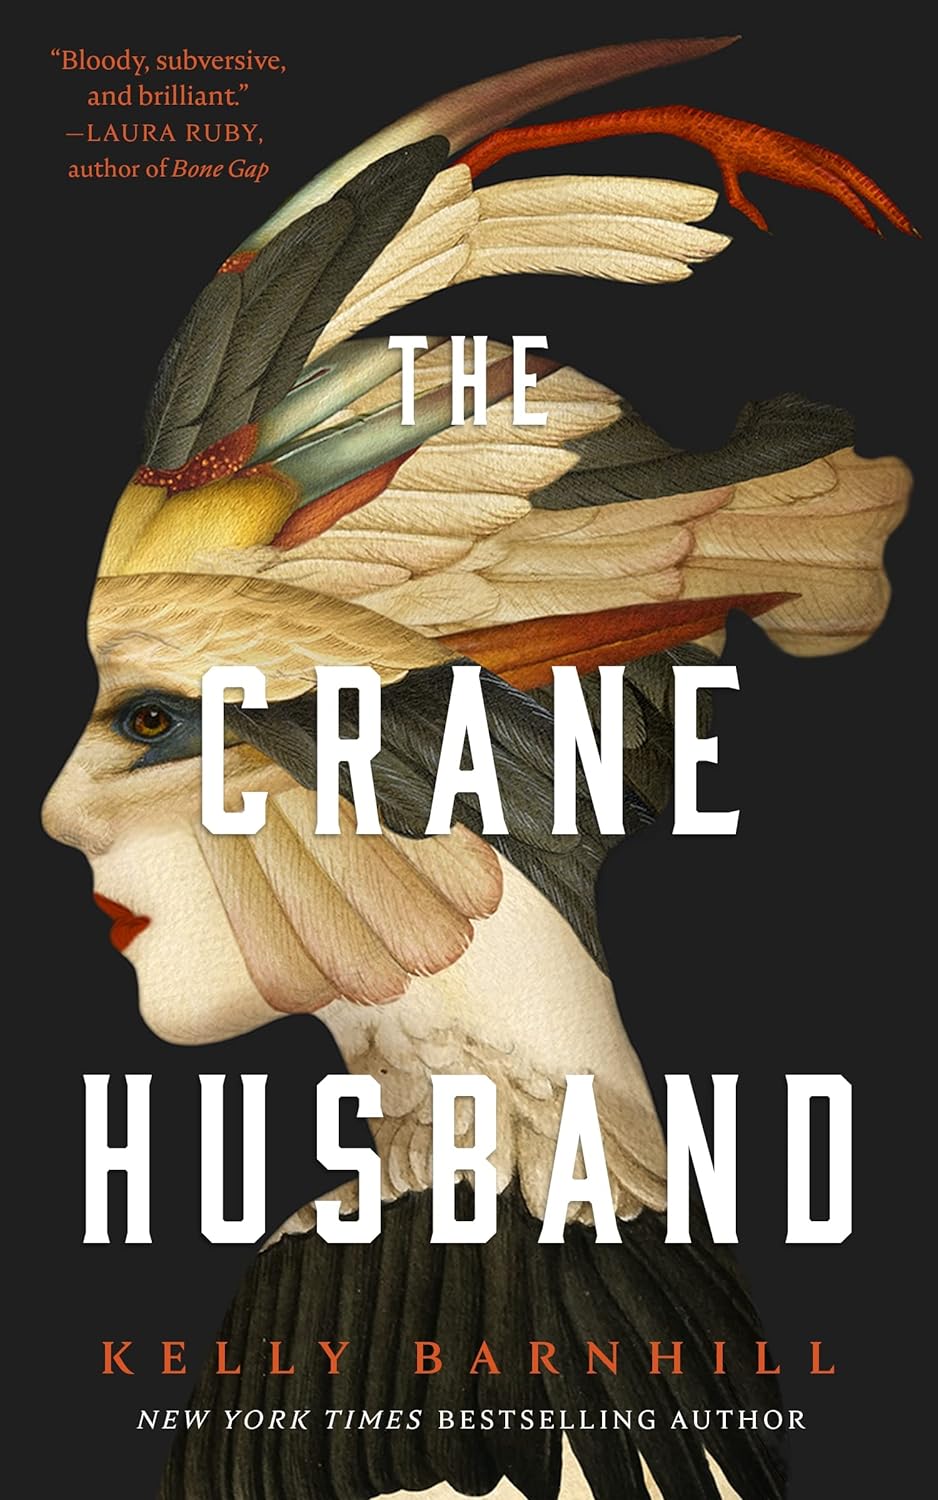 The Crane Husband (Hardcover)